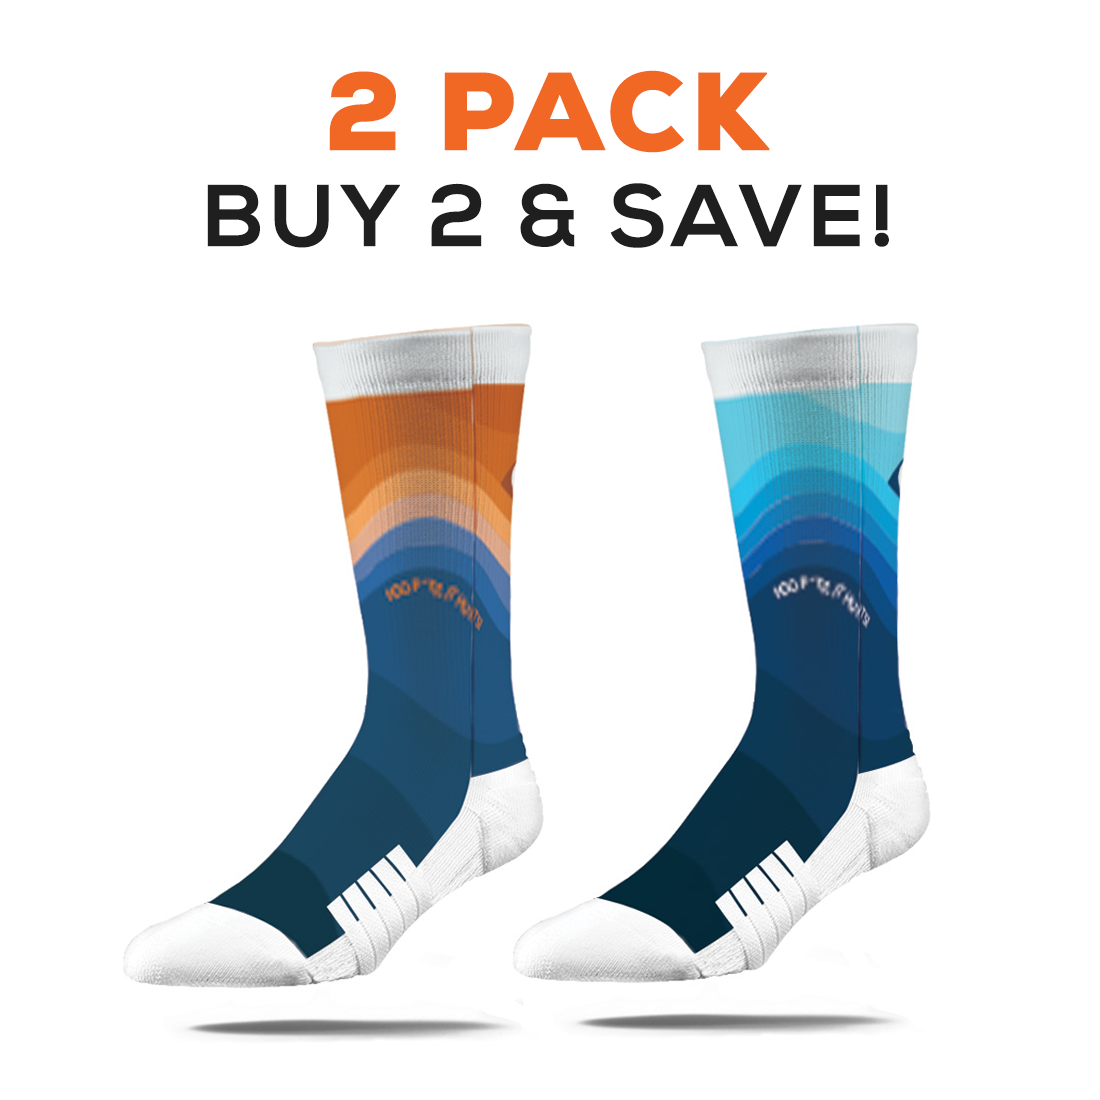 Variety 2 Pack - Venice Beach Sunset Socks - Buy 2 and Save!